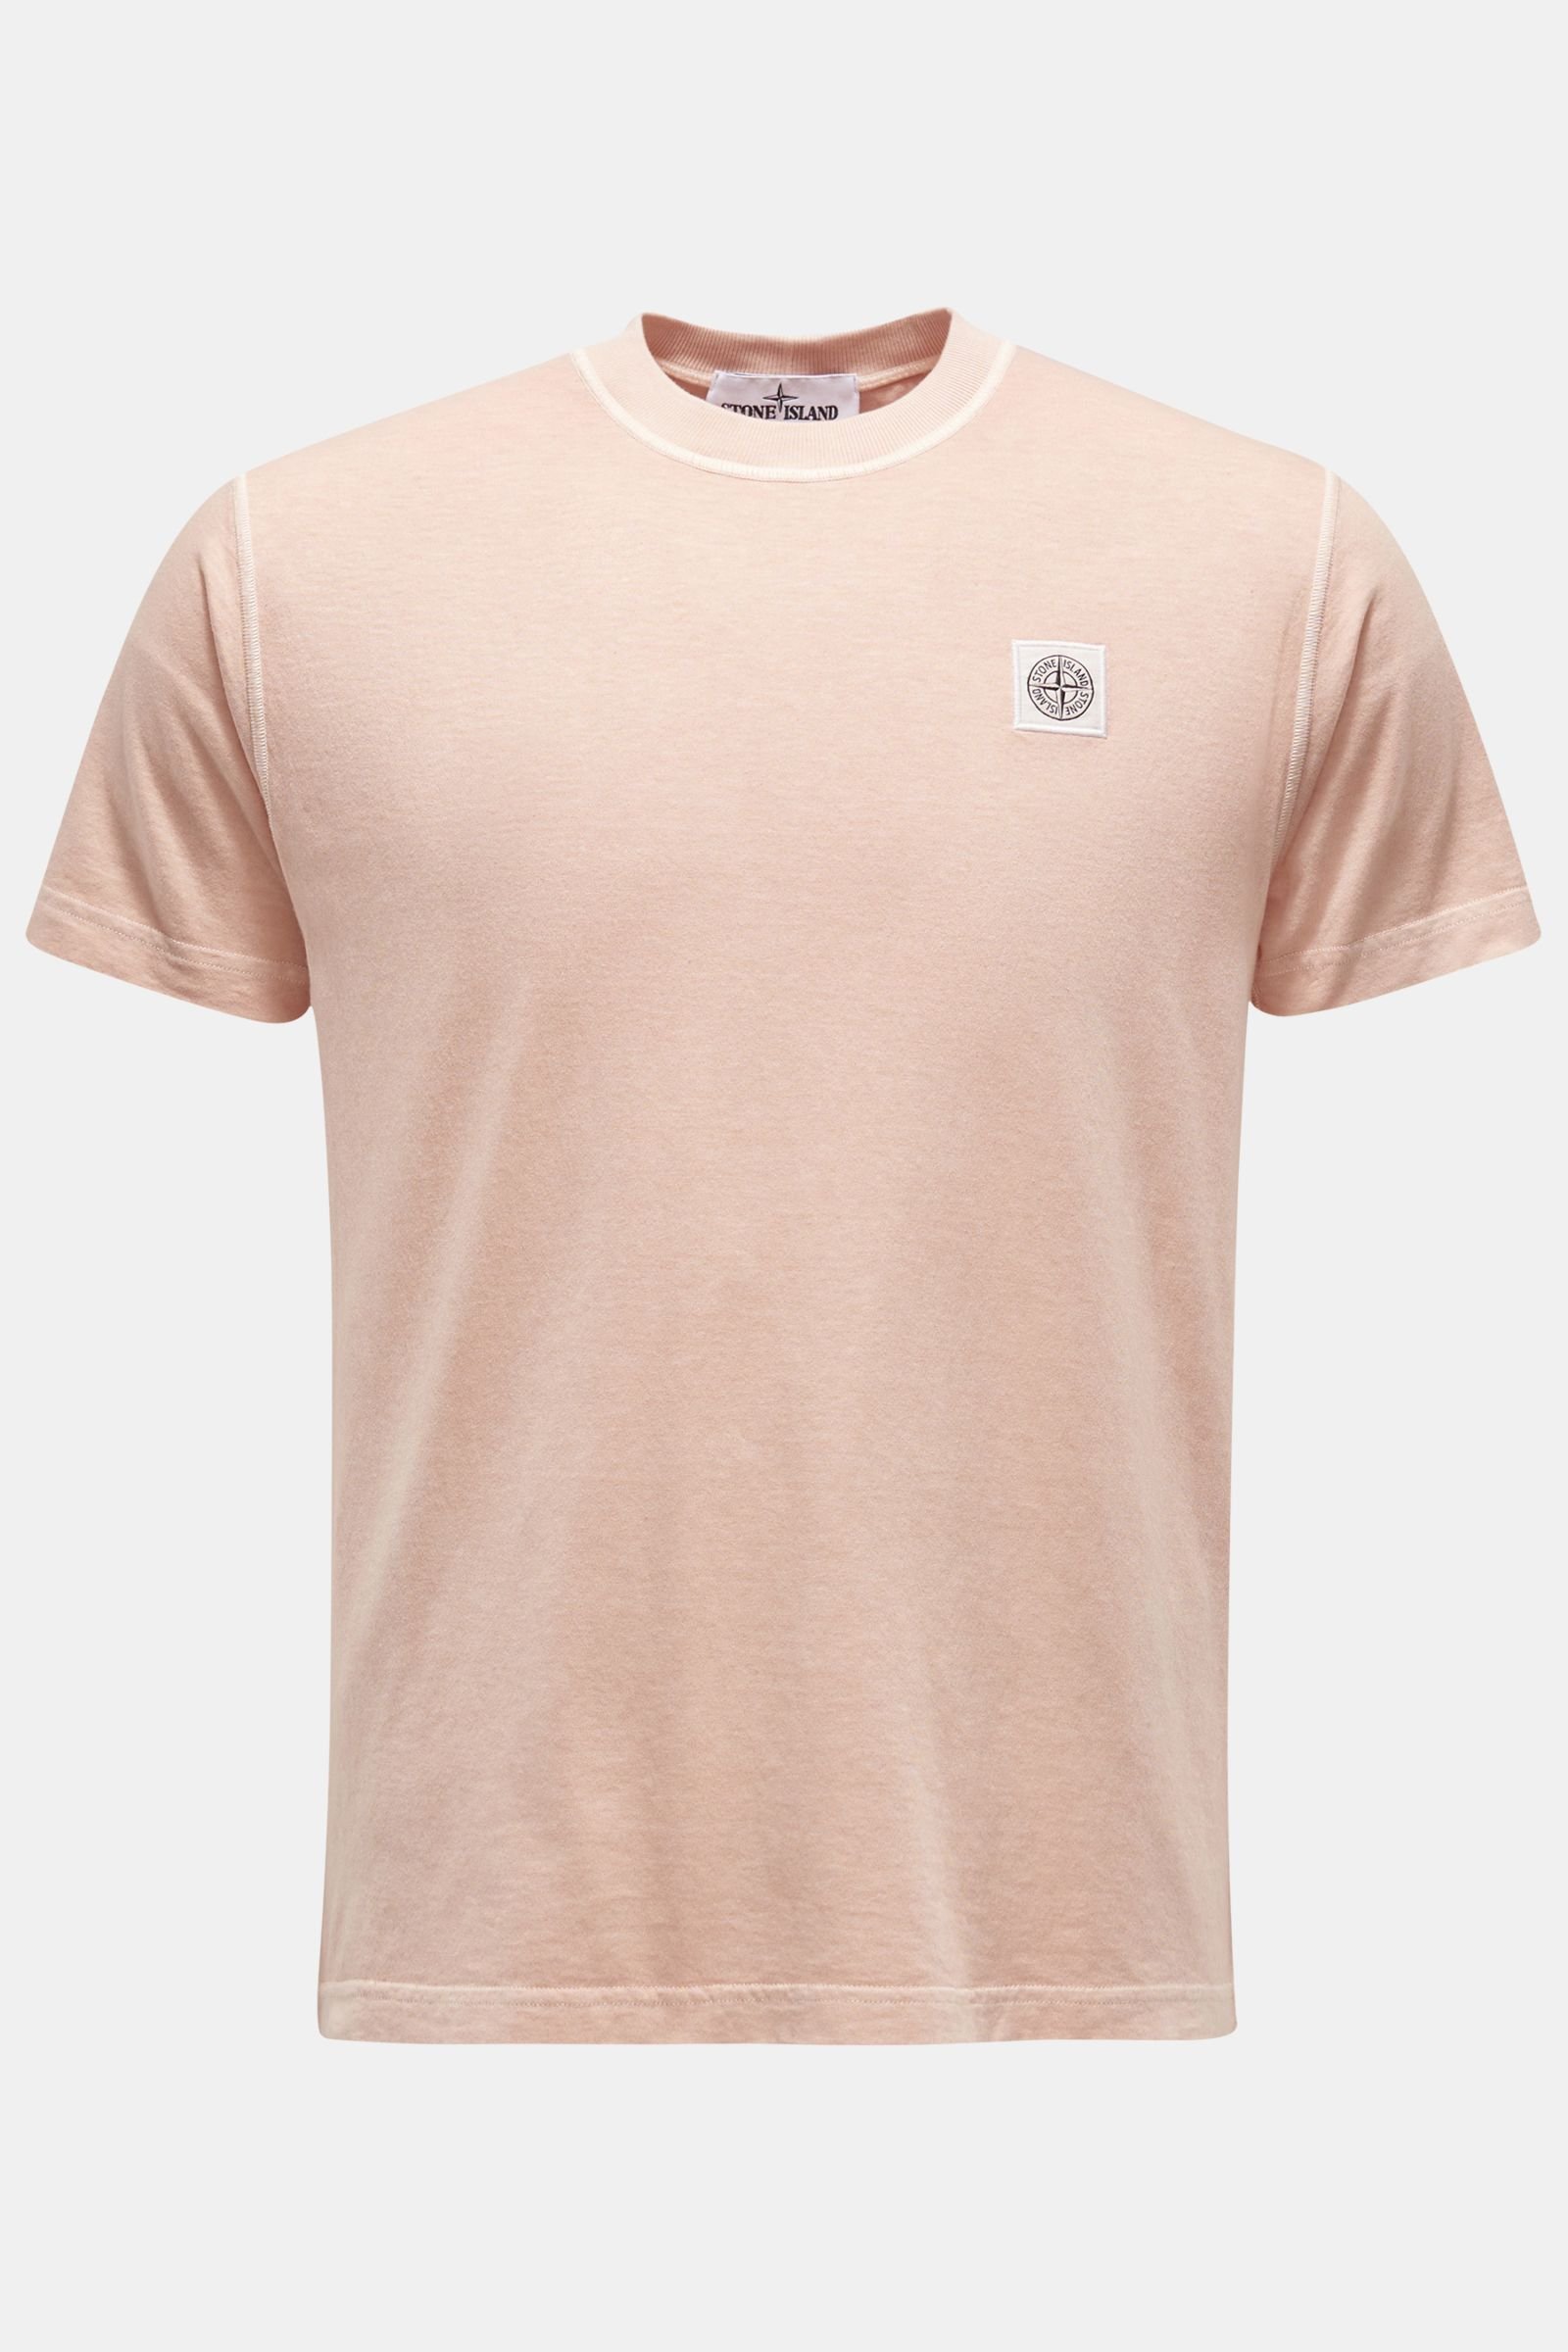 Crew neck T-shirt antique pink